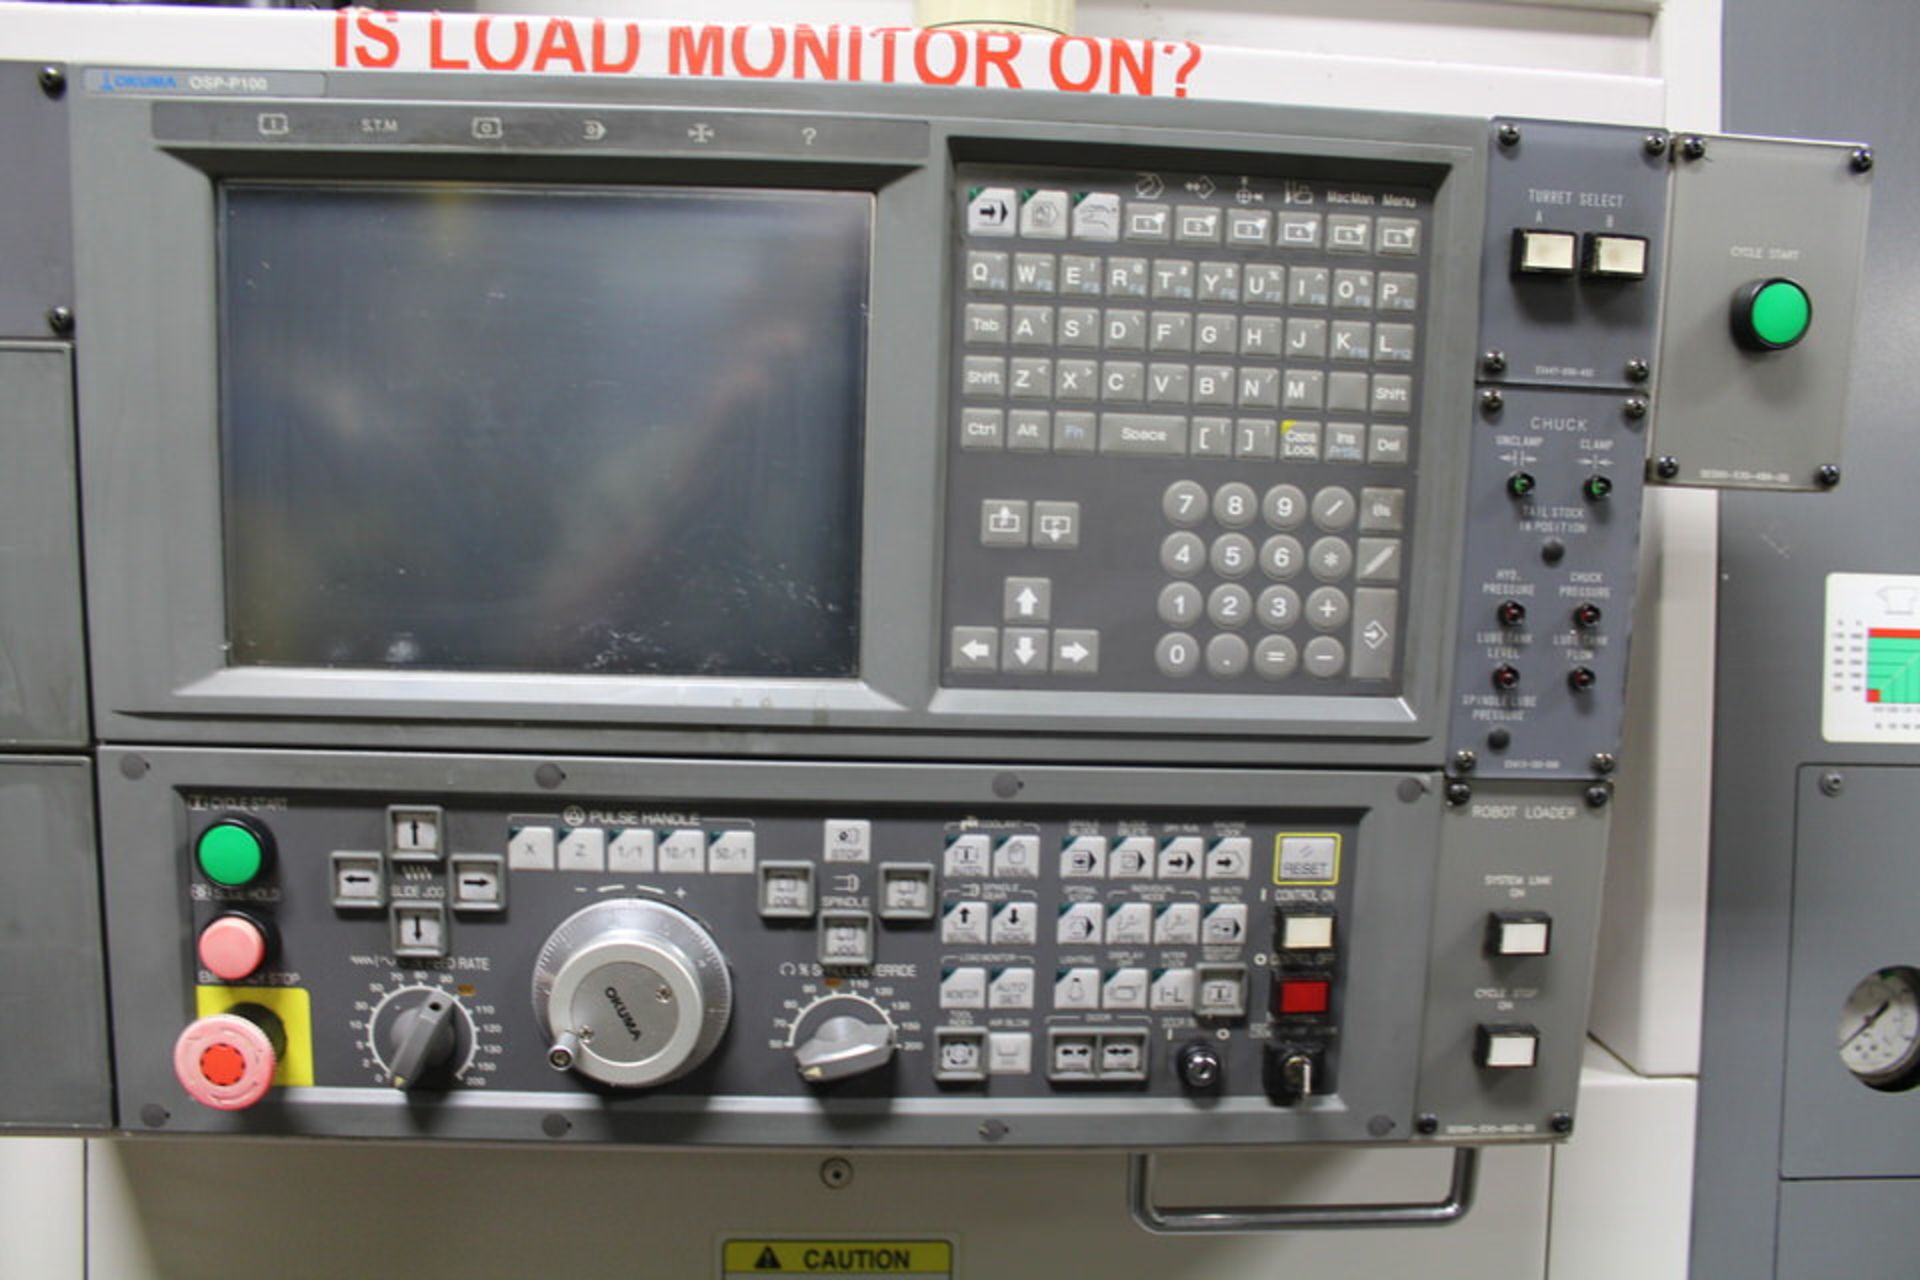 2007 OKUMA SIMUL TURN LU-300 CNC LATHE, SCHUNK ROTA THW 260-81, 10" 3 JAW CHUCK, 8 STATION TURRET - Image 2 of 5